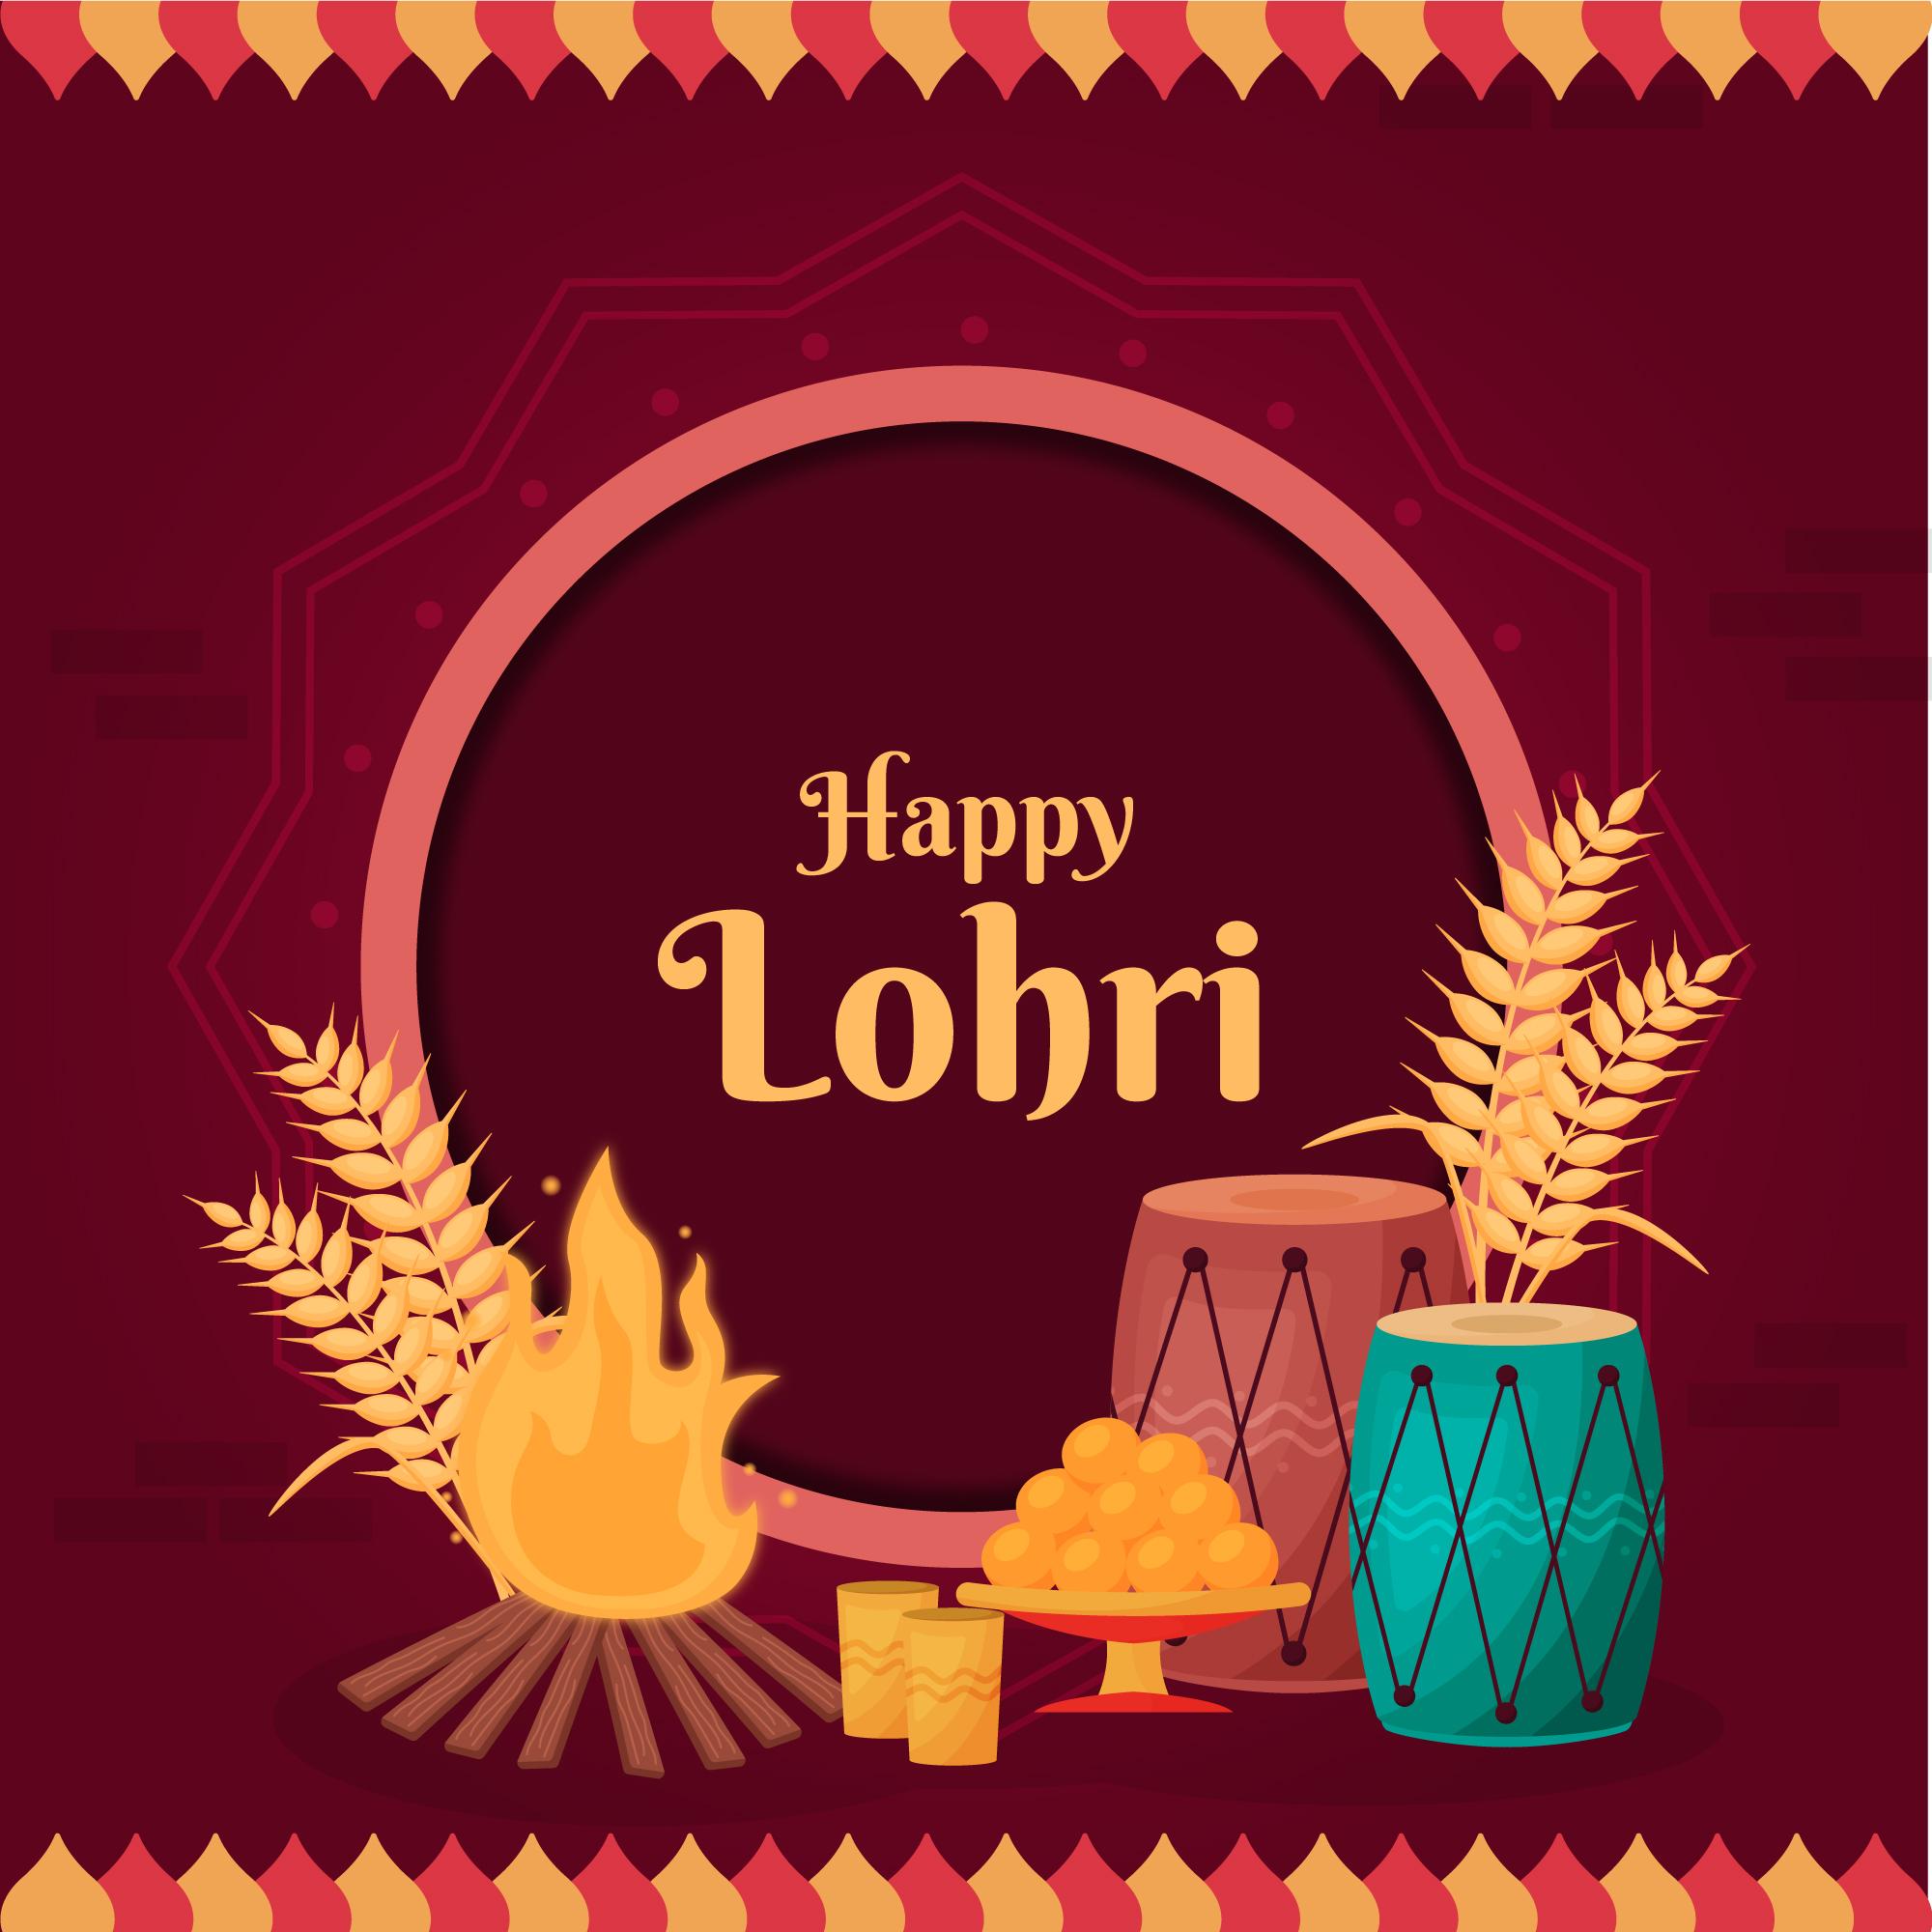 Lohri | A Detailed Article on Lohri 2022 | MD BIOCOALS